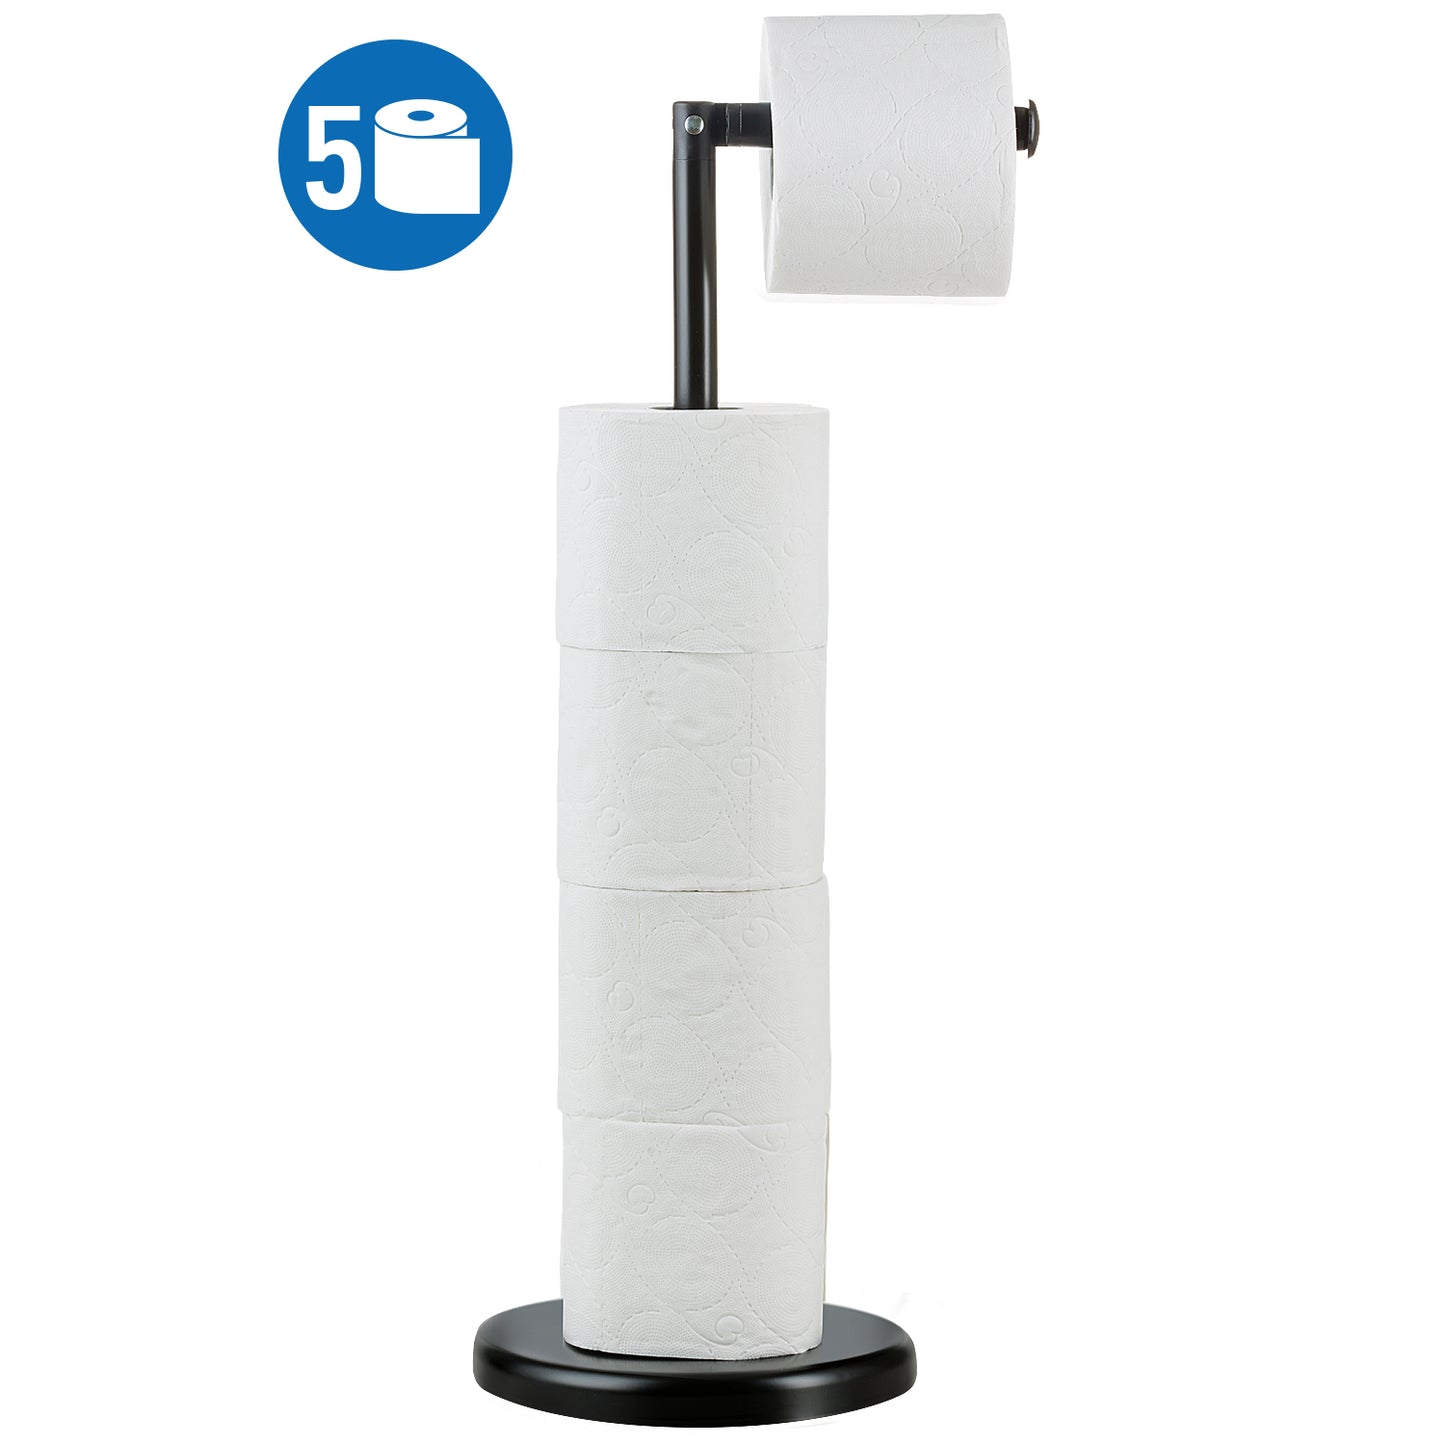 Toilet Roll Holder FreeStanding, Toilet Paper Stand Storage